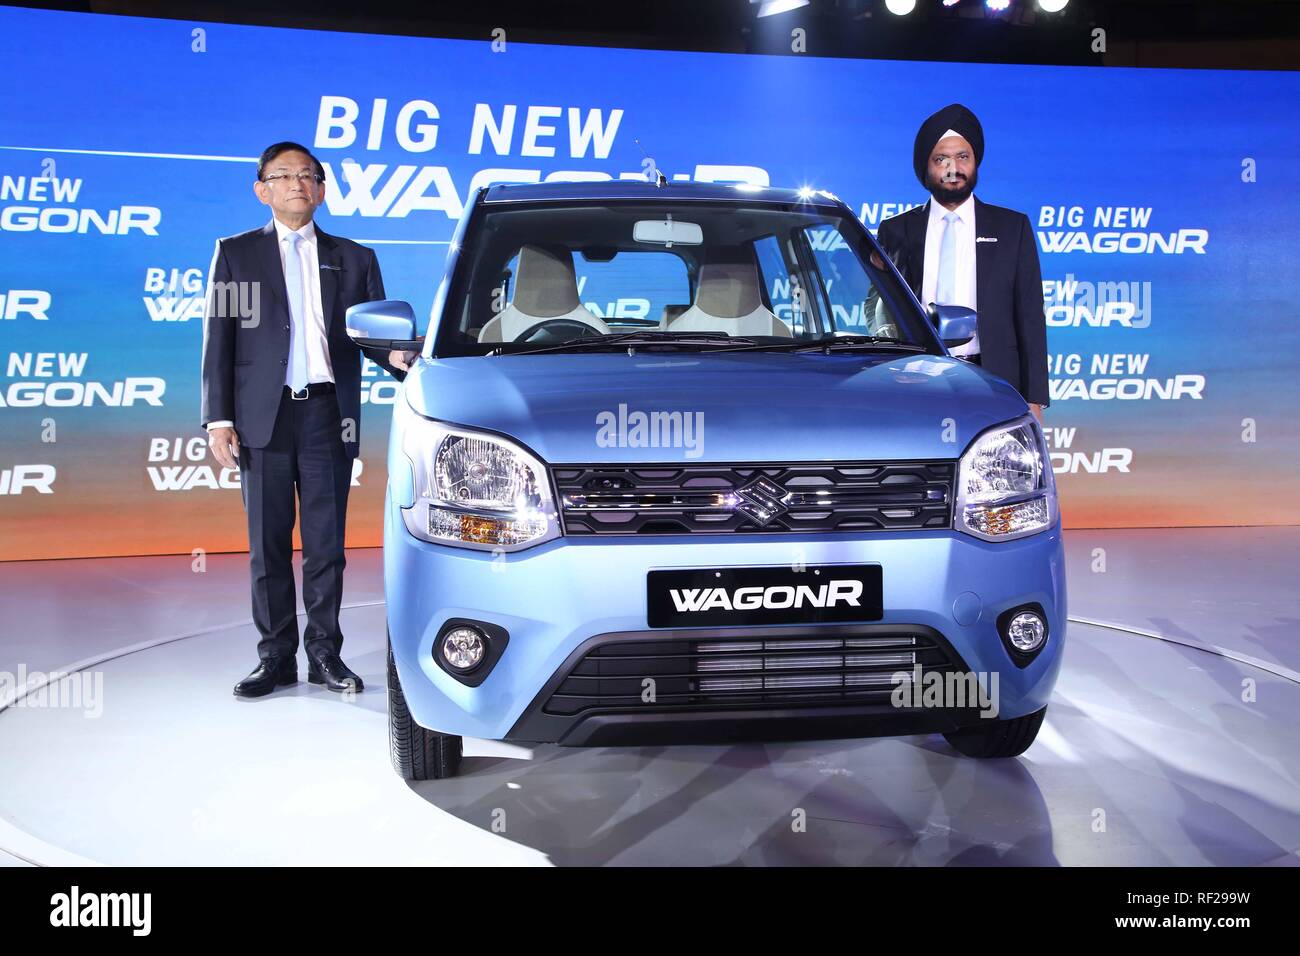 Maruti Suzuki, CEO Kenichi Ayukawa and Senior Executive Director, Maruti Suzuki India Ltd Randhir Singh Kalsi during the launch of Big New Wagon R (Photo by Jyoti Kapoor / Pacific Press) Stock Photo